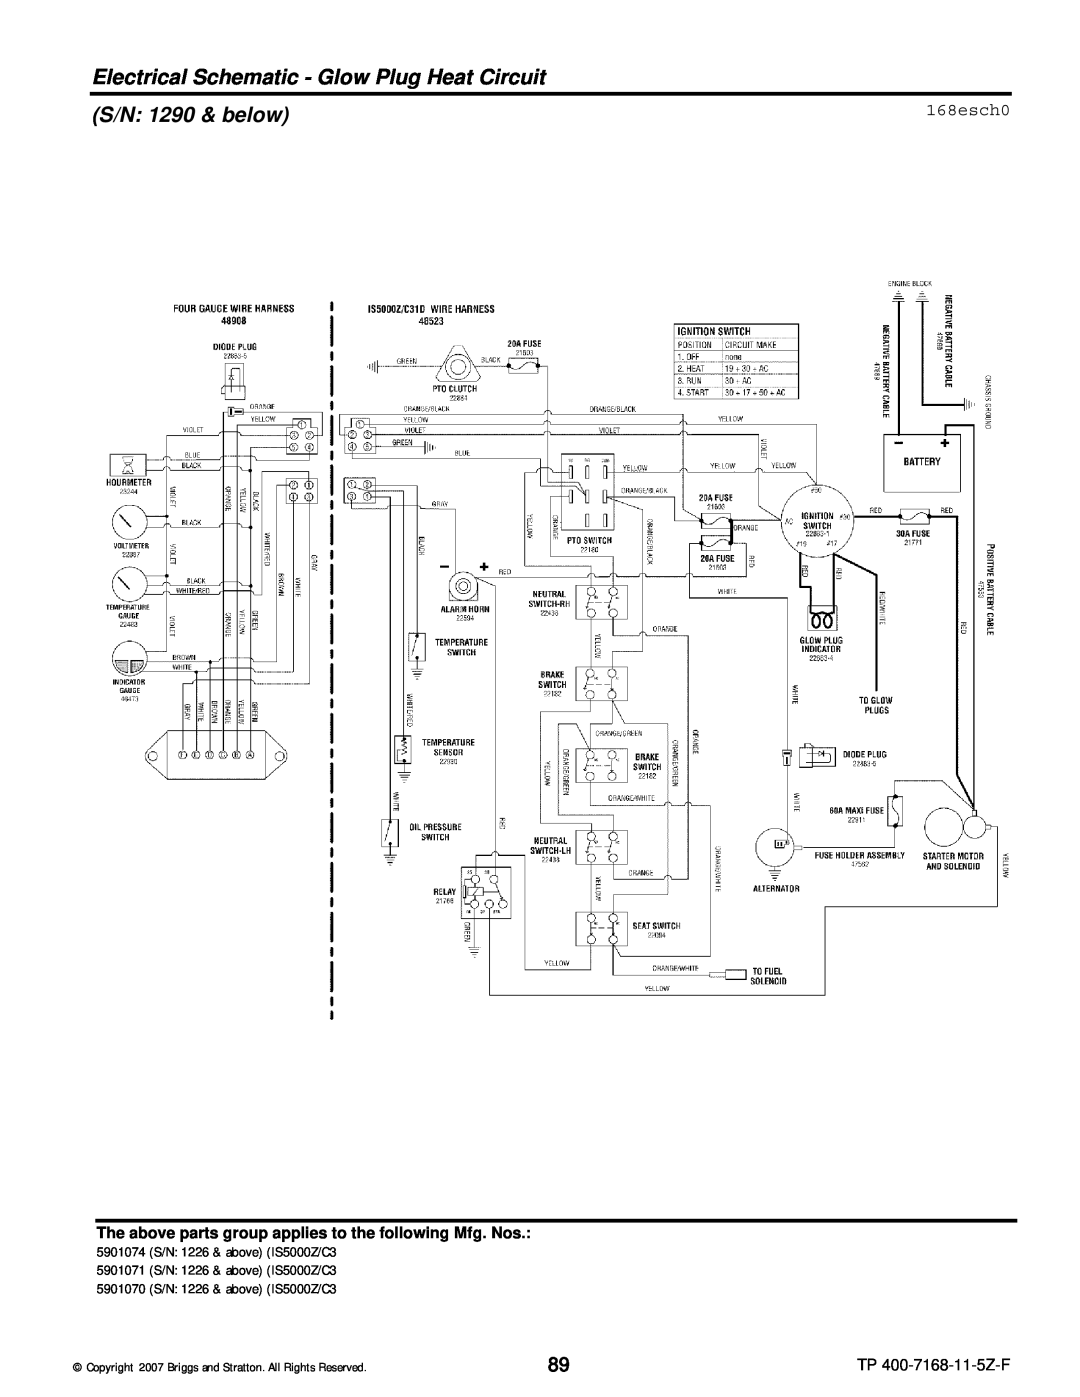 Briggs & Stratton 5901074 Electrical Schematic - Glow Plug Heat Circuit, 168esch0, S/N 1290 & below, TP 400-7168-11-5Z-F 